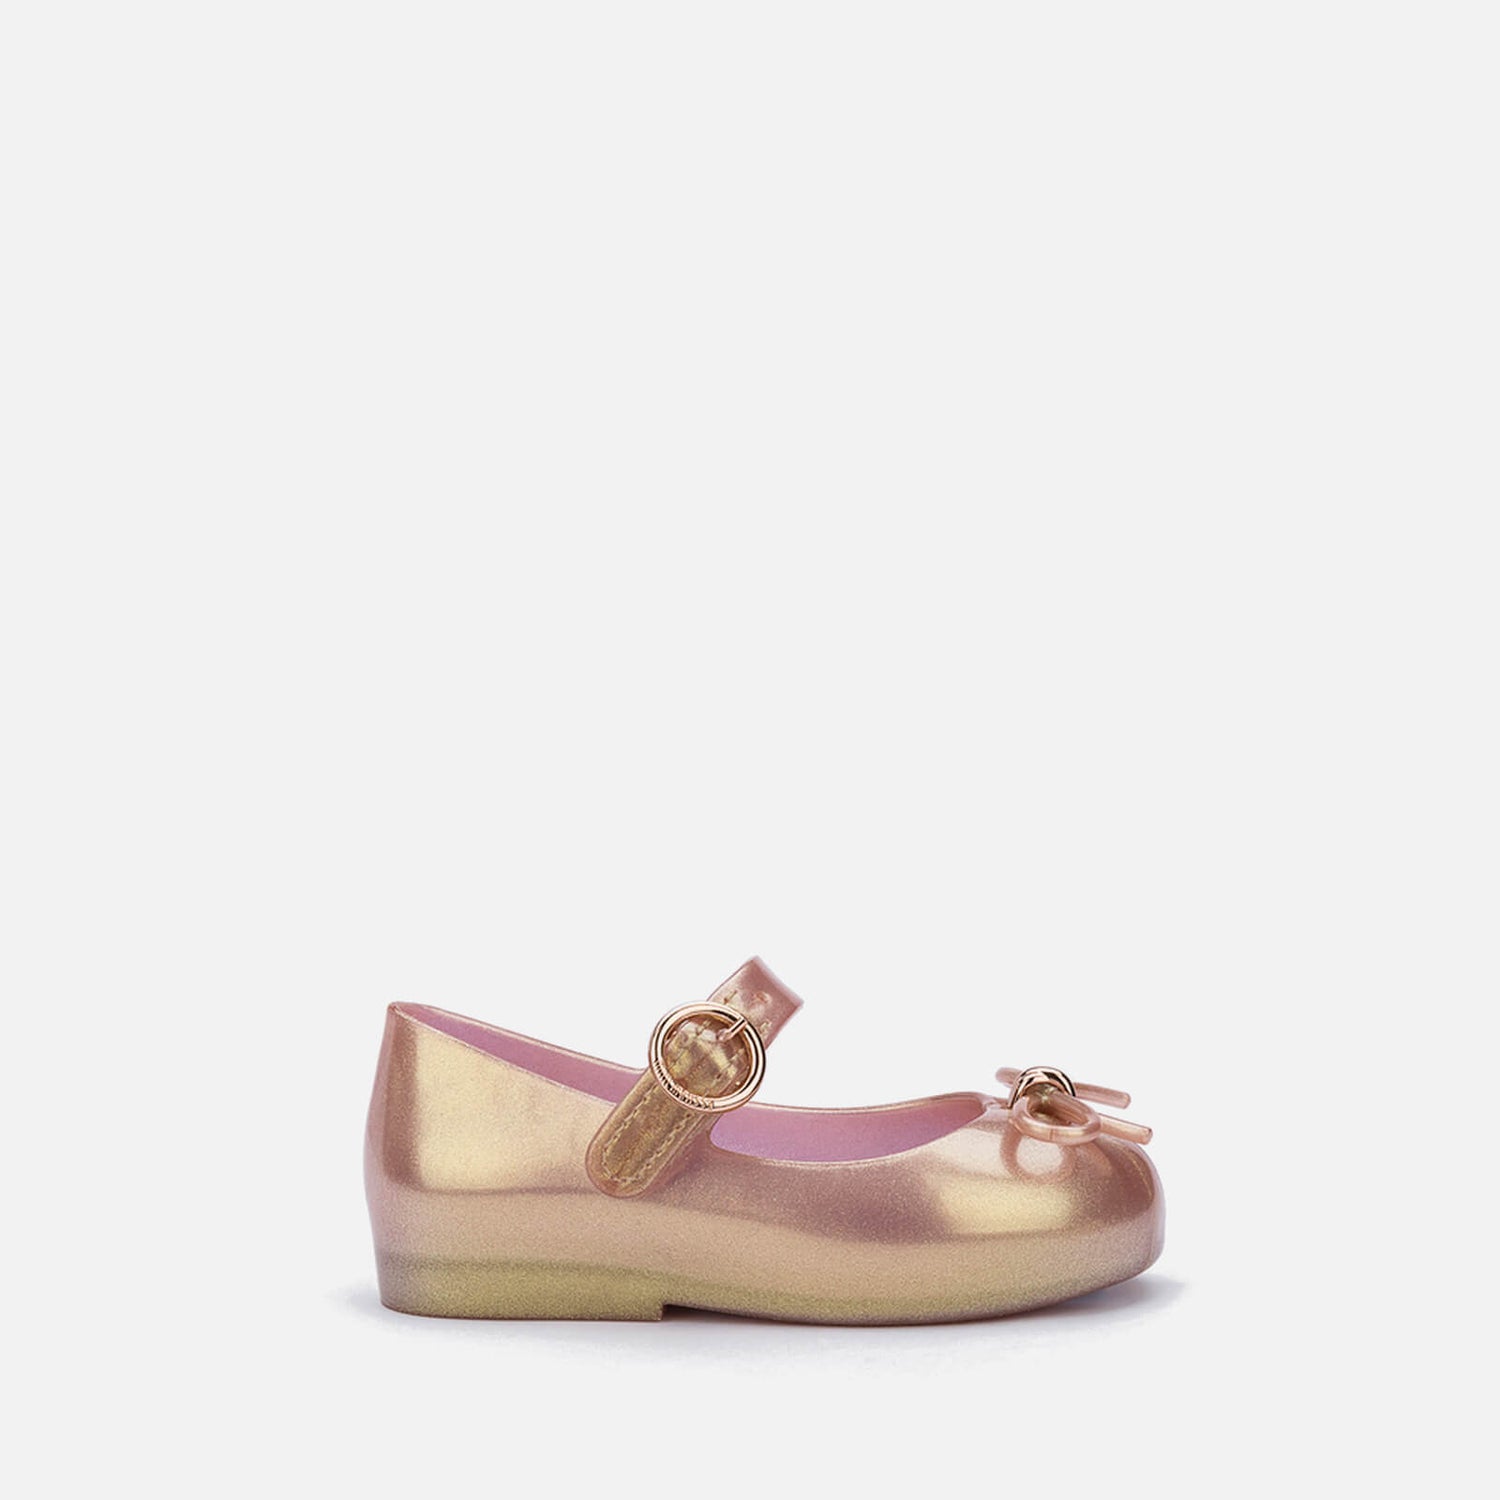 Mini Melissa Girls' Sweet Love Lace Ballet Flat Sandals - Pink - UK 3-4 Baby